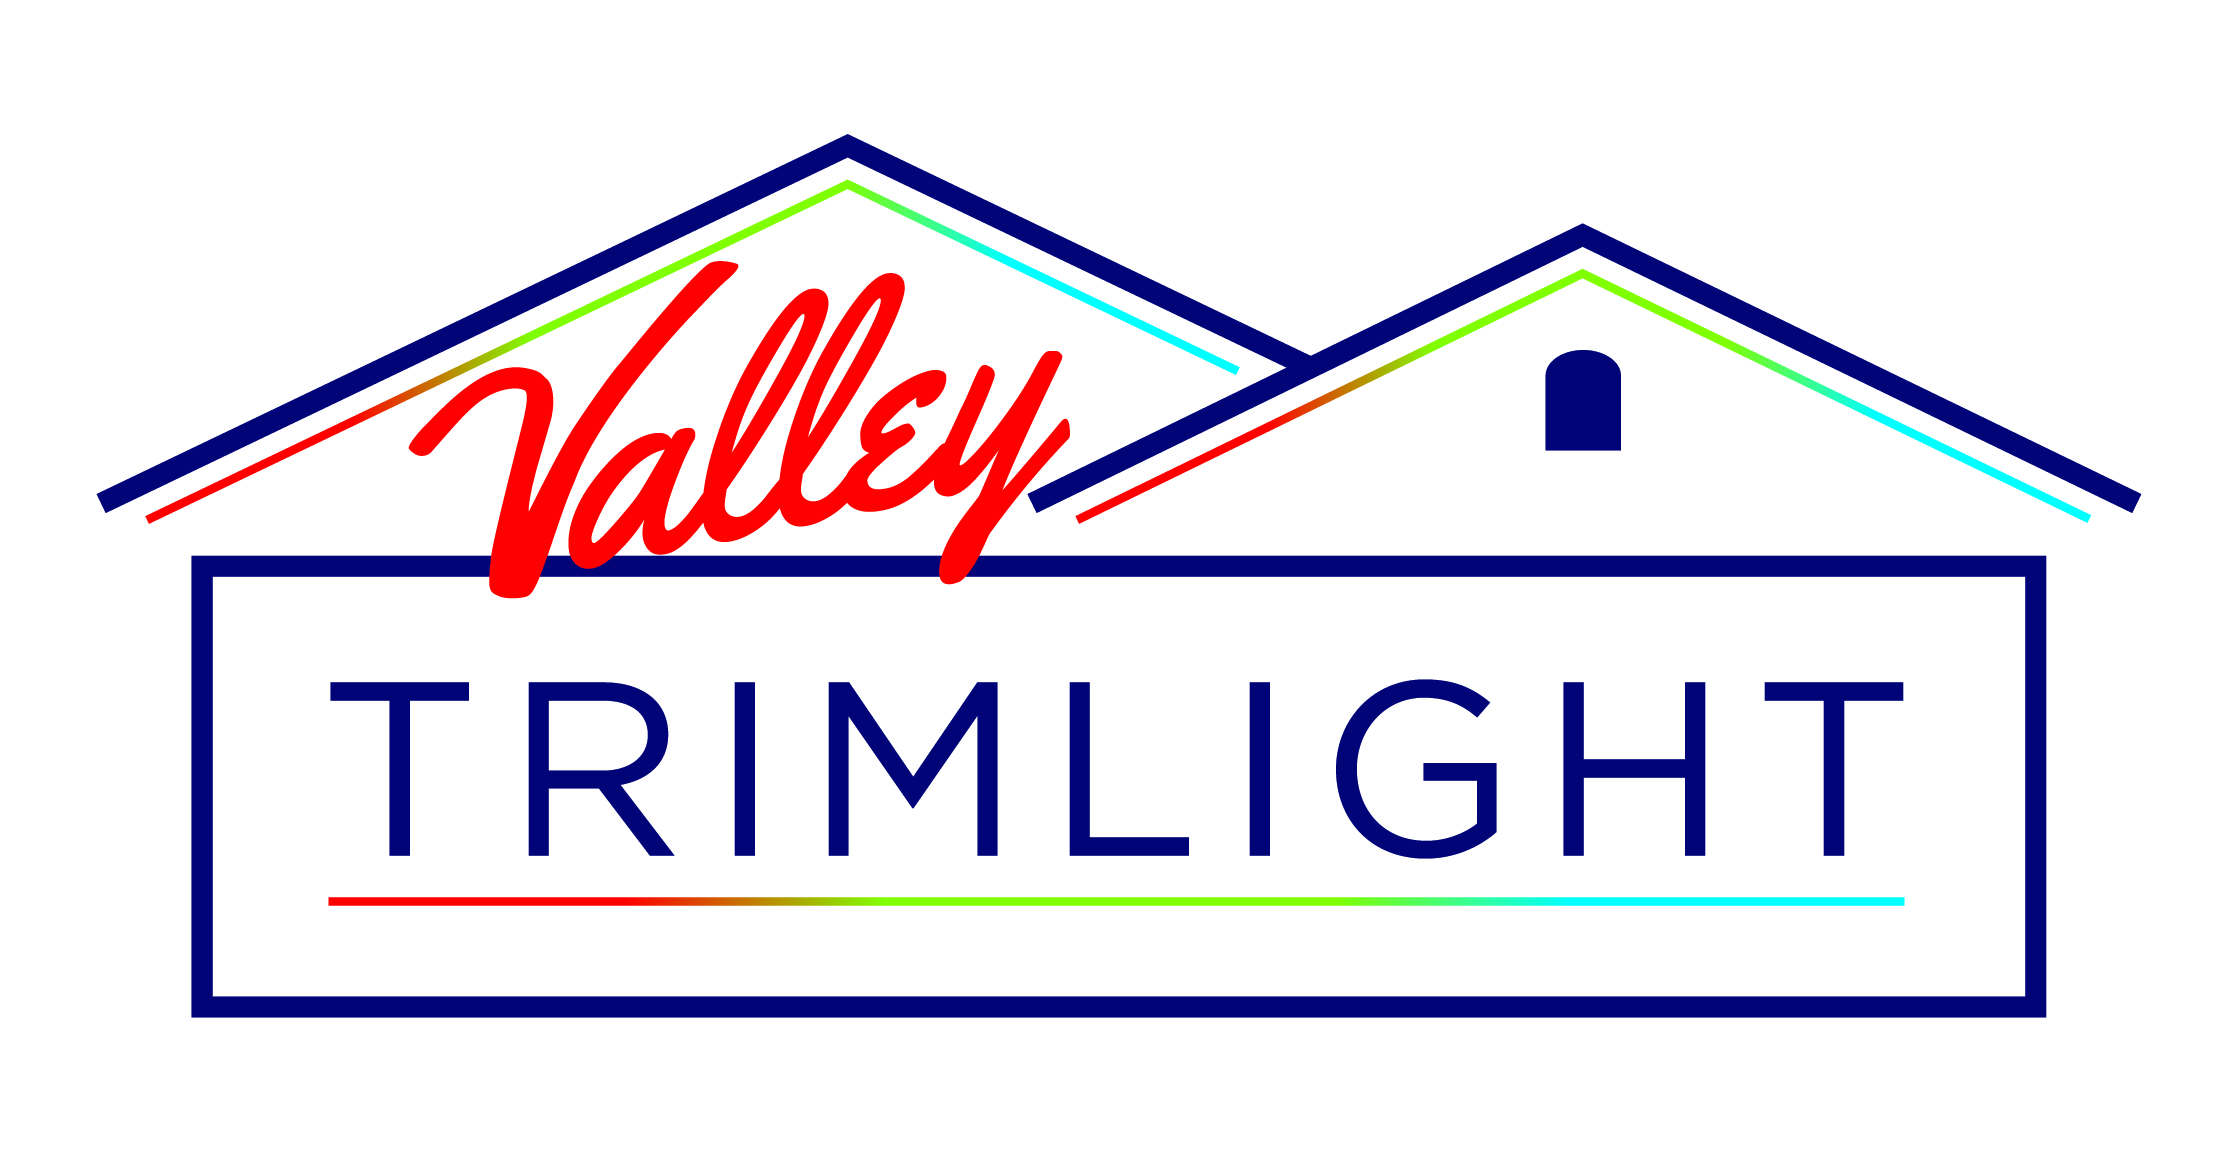 Valley Trimlight